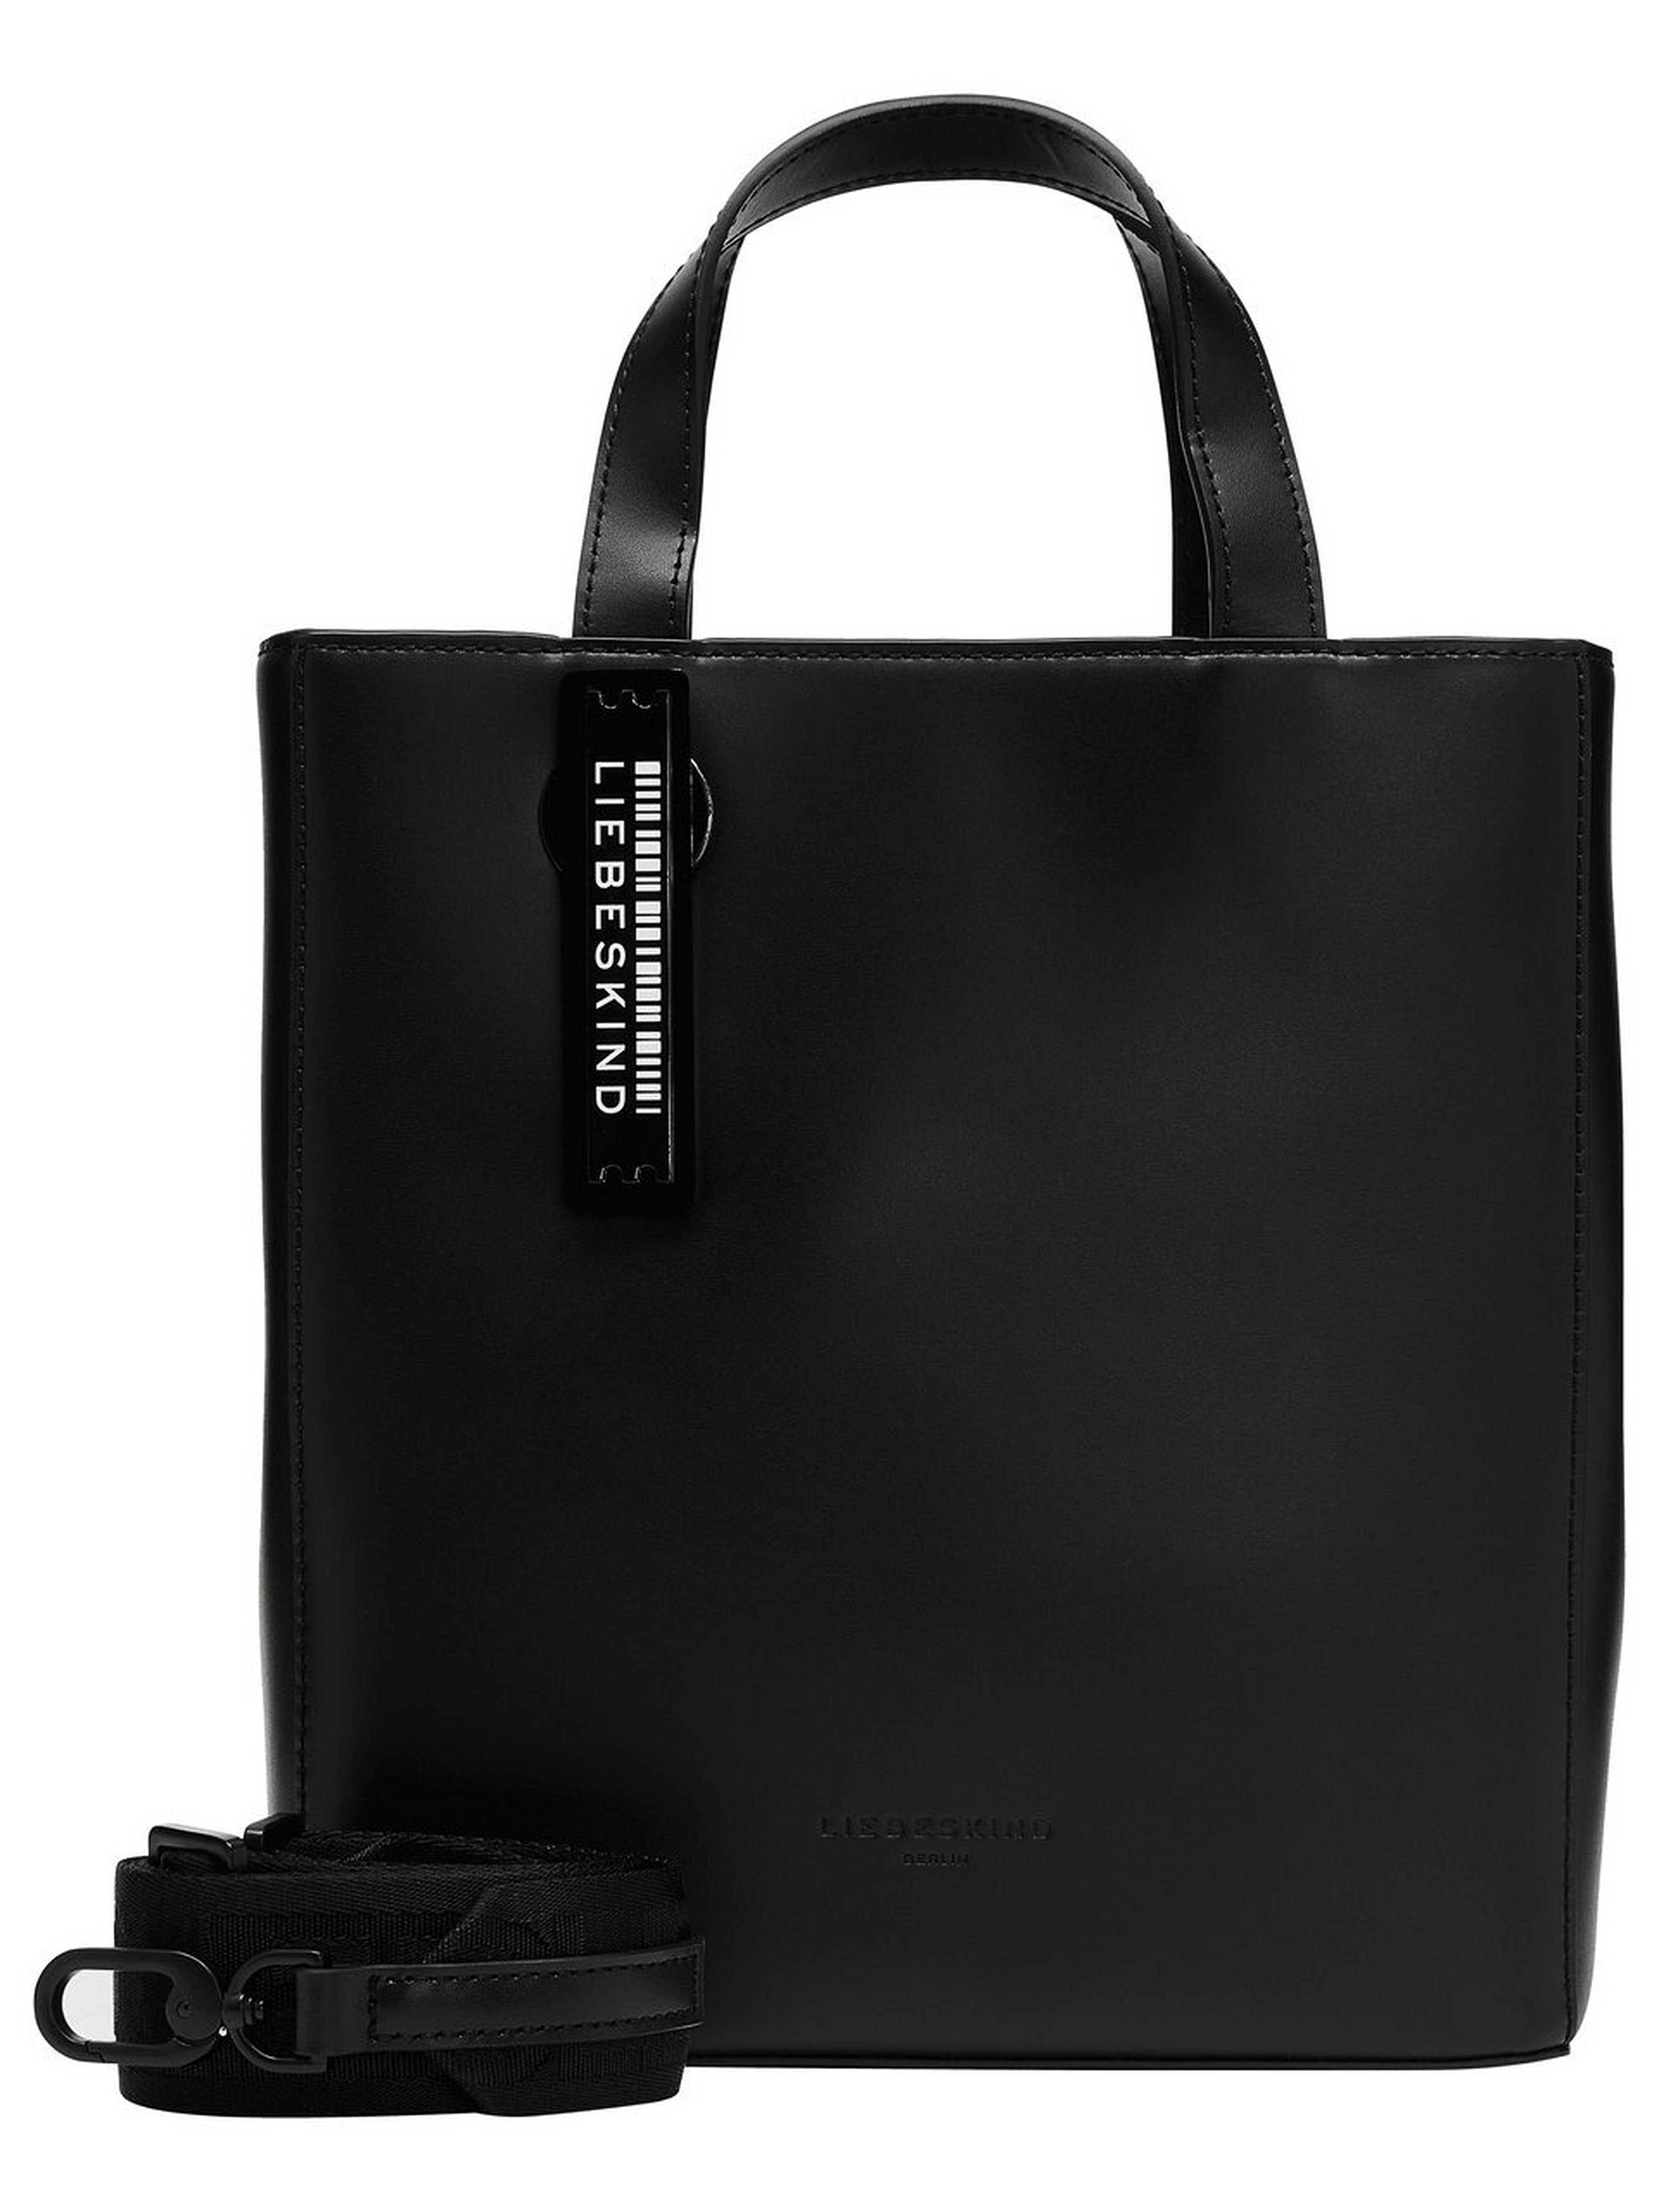 Handbag Liebeskind black